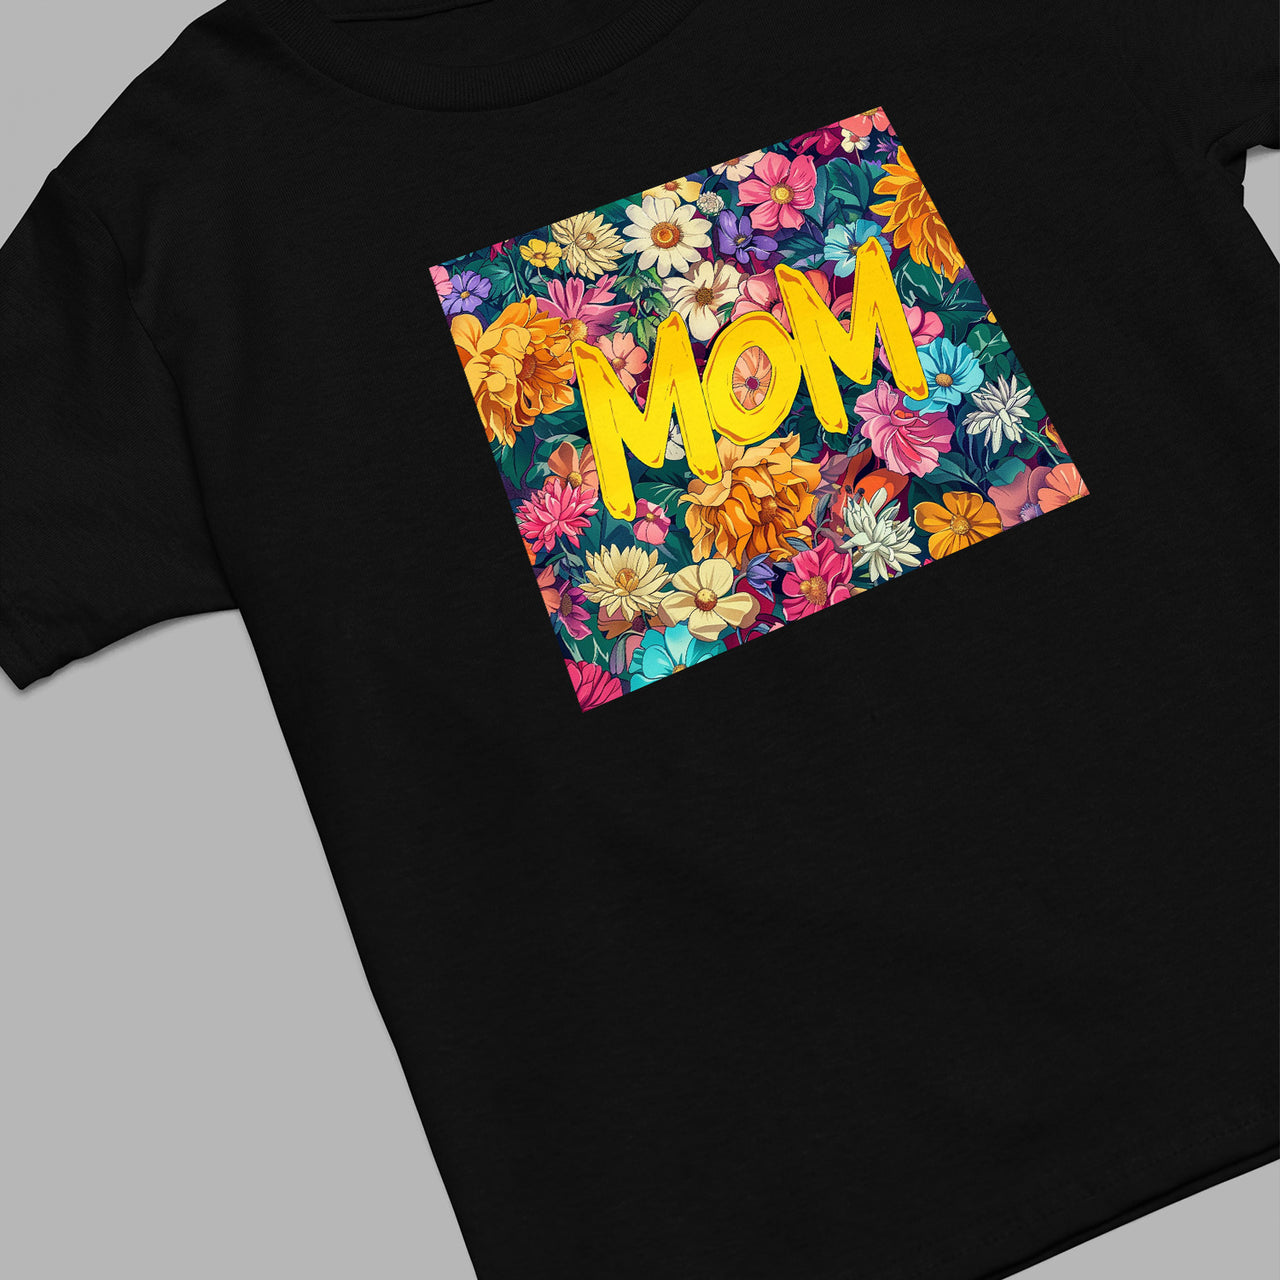 Floral Mom T-Shirt, Cute Floral Mom Shirt, Mom Flower Shirt, Mama Shirt, Mom Shirt, Mother's Day Gift